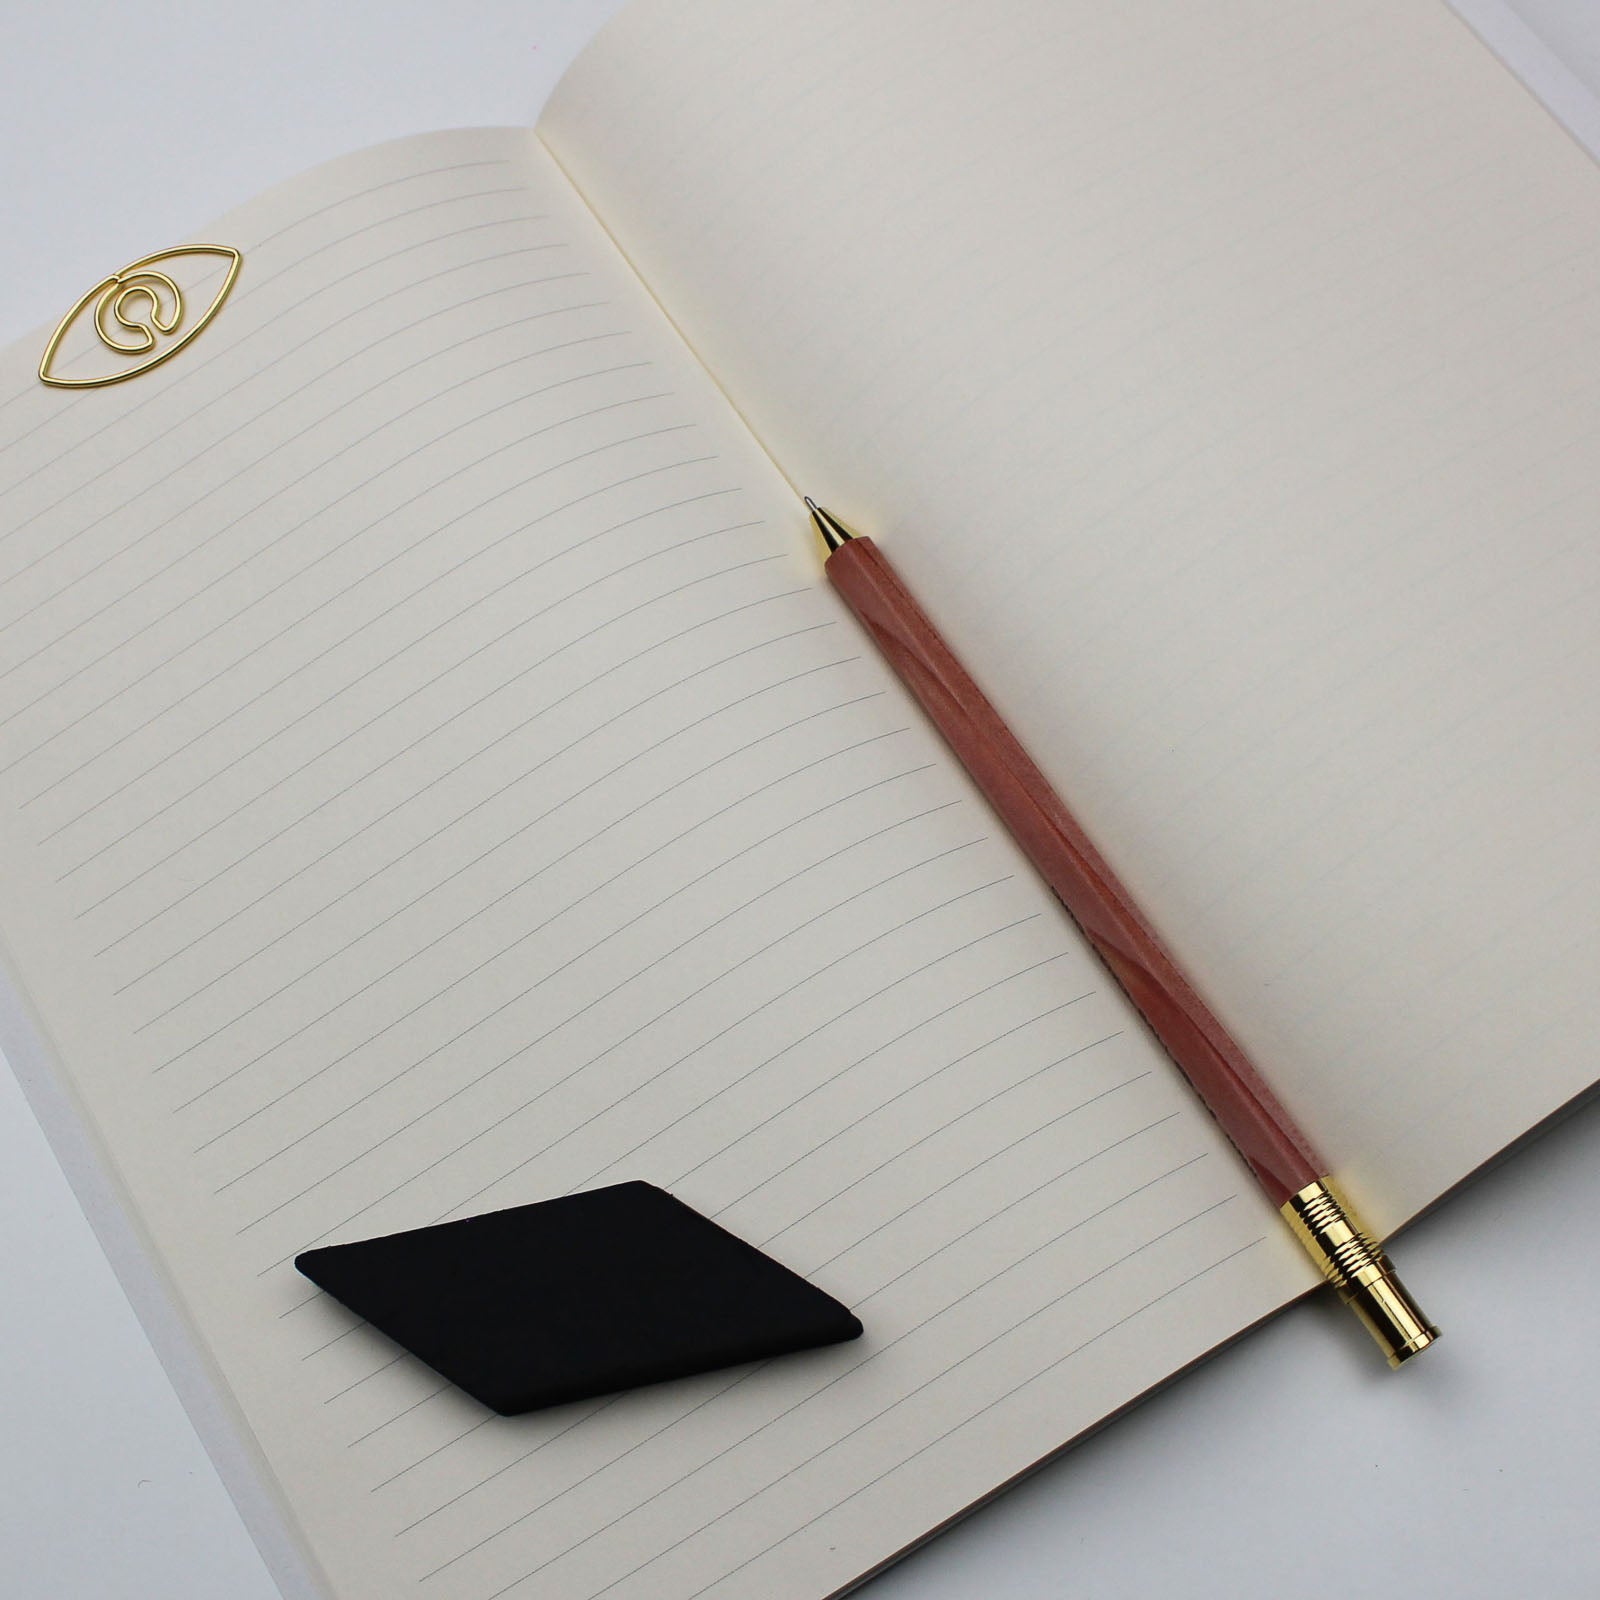 My Amazing Ideas - Notebook